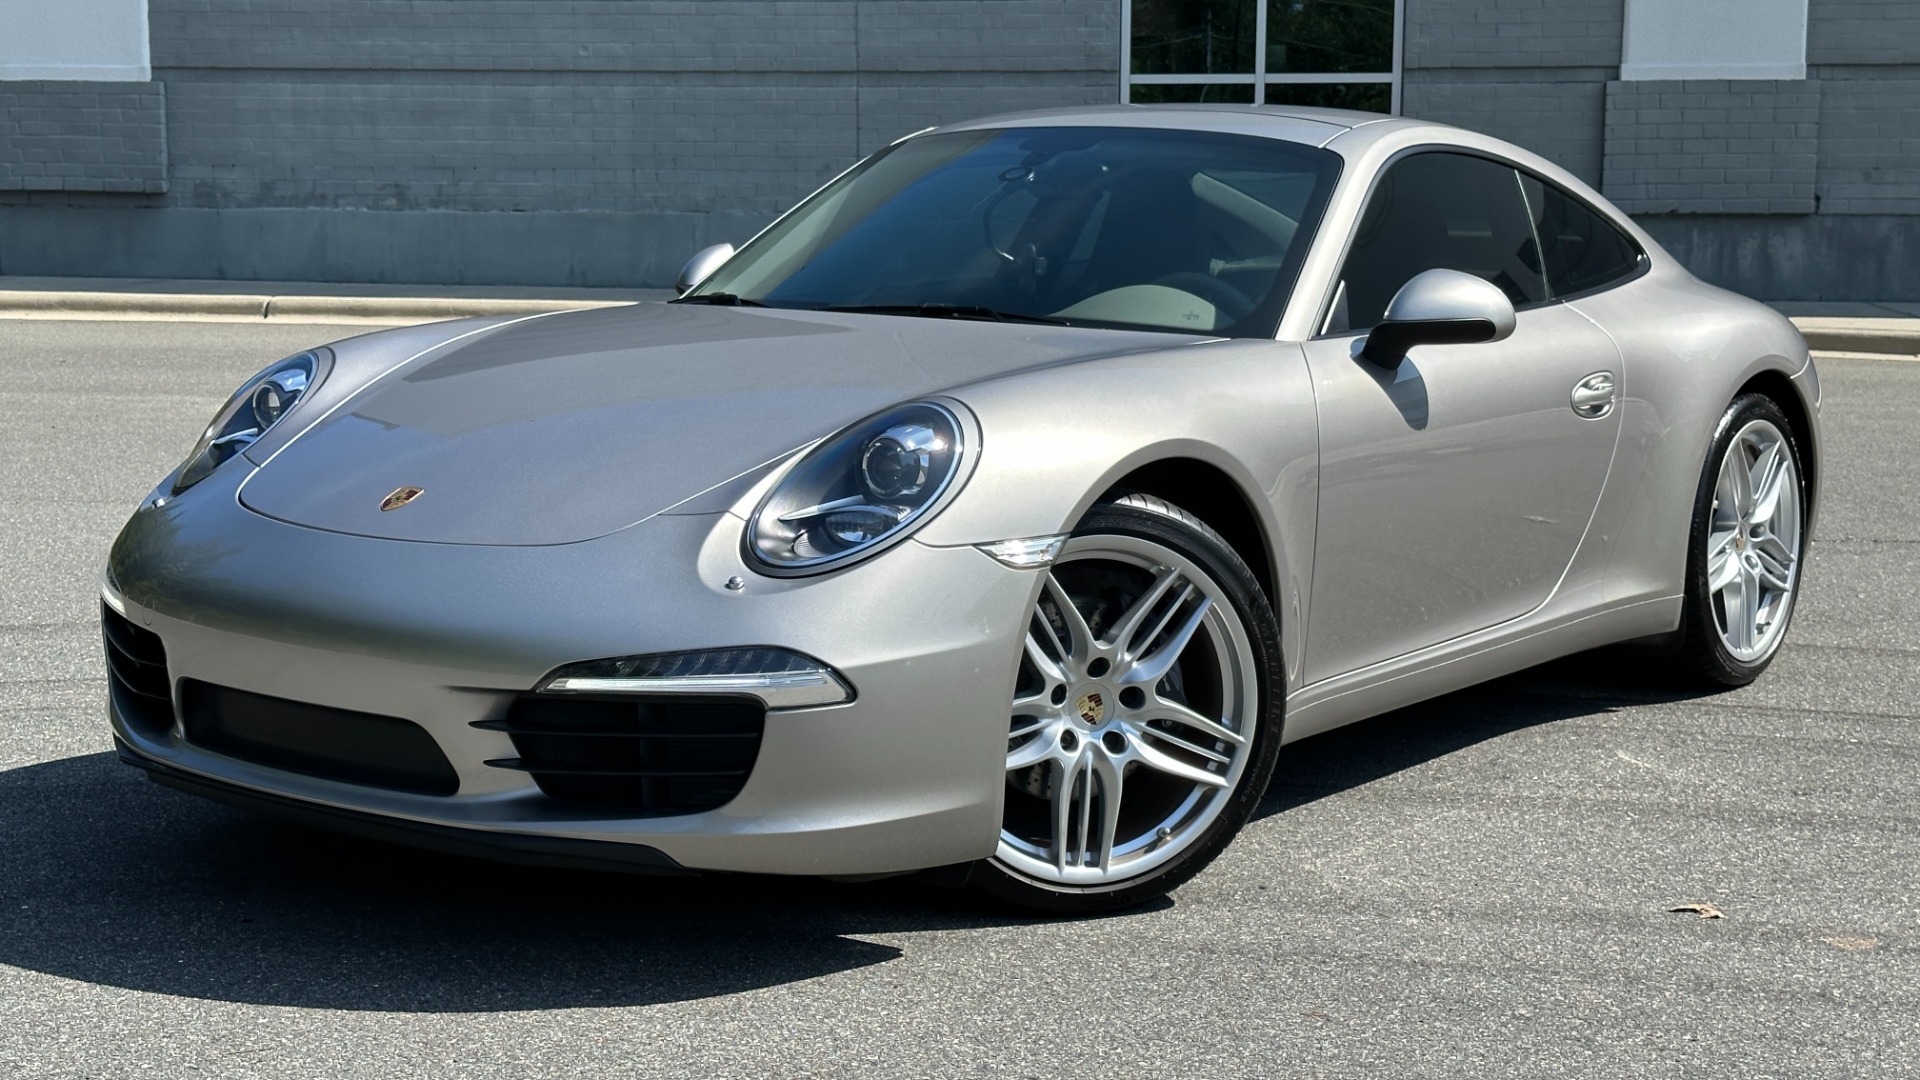 Used 2012 Porsche 911 991 CARRERA / PREMIUM PKG PLUS / SPORT EXHAUST / SPORT SEATS for sale $71,000 at Formula Imports in Charlotte NC 28227 1